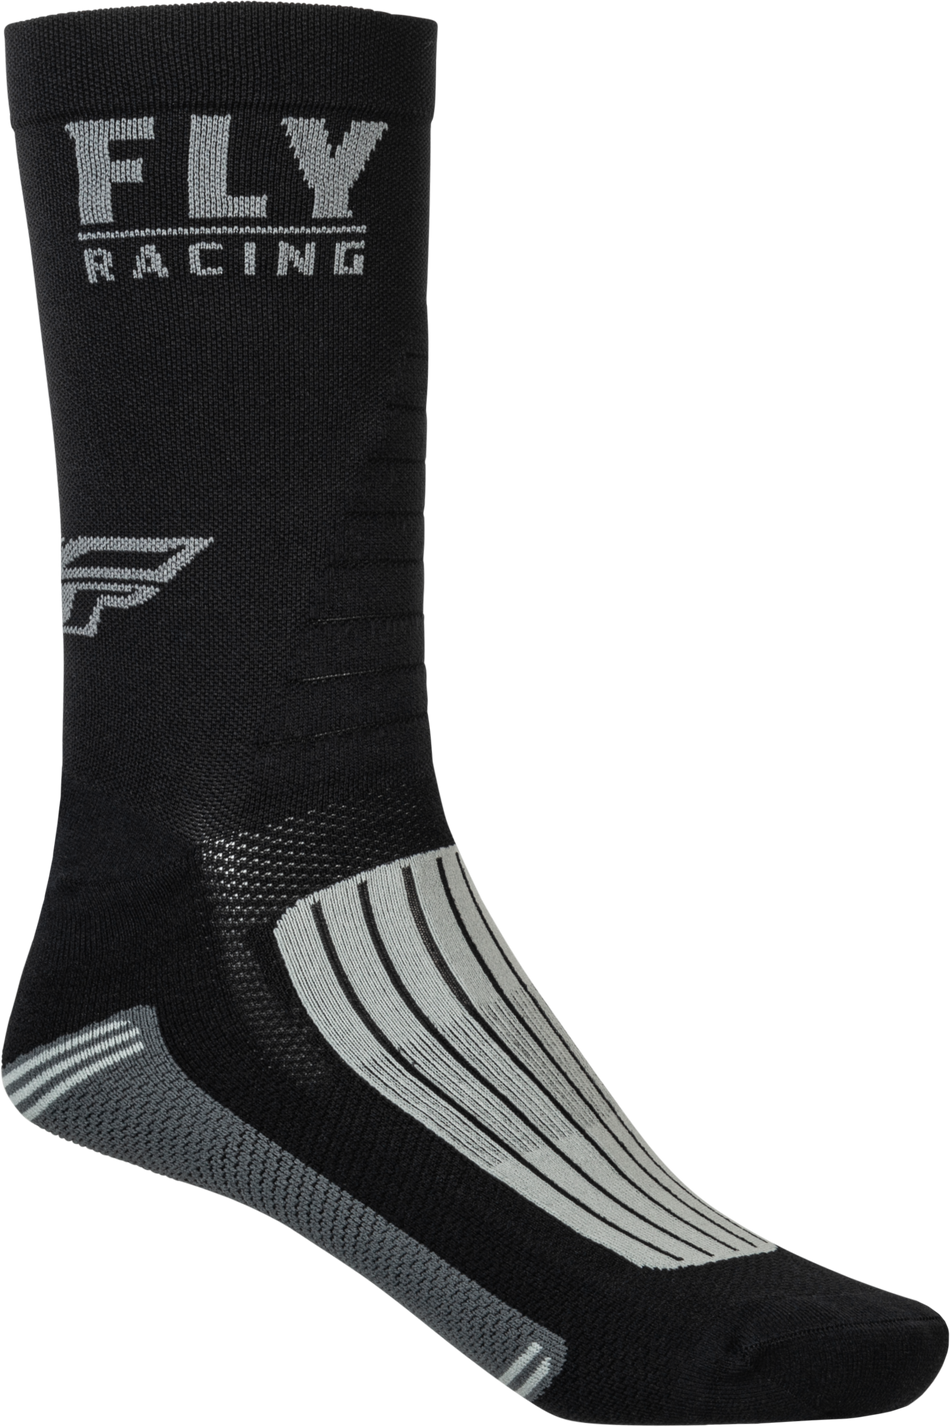 FLY RACING Factory Rider Socks Black/Grey Lg/Xl 350-0561L